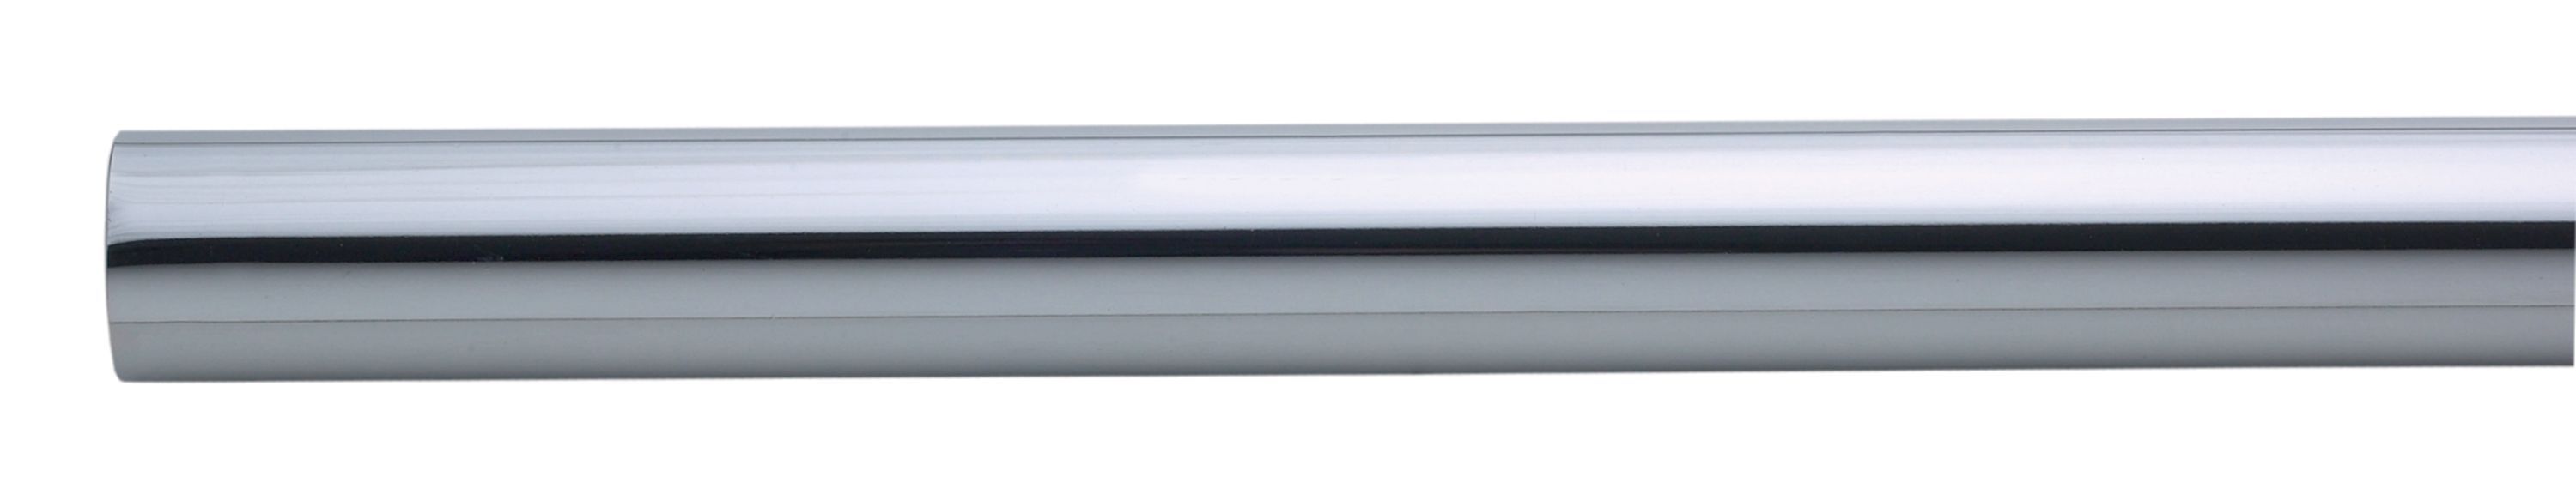 Colorail Chrome effect Steel Round Tube, (L)1.22m (Dia)25mm